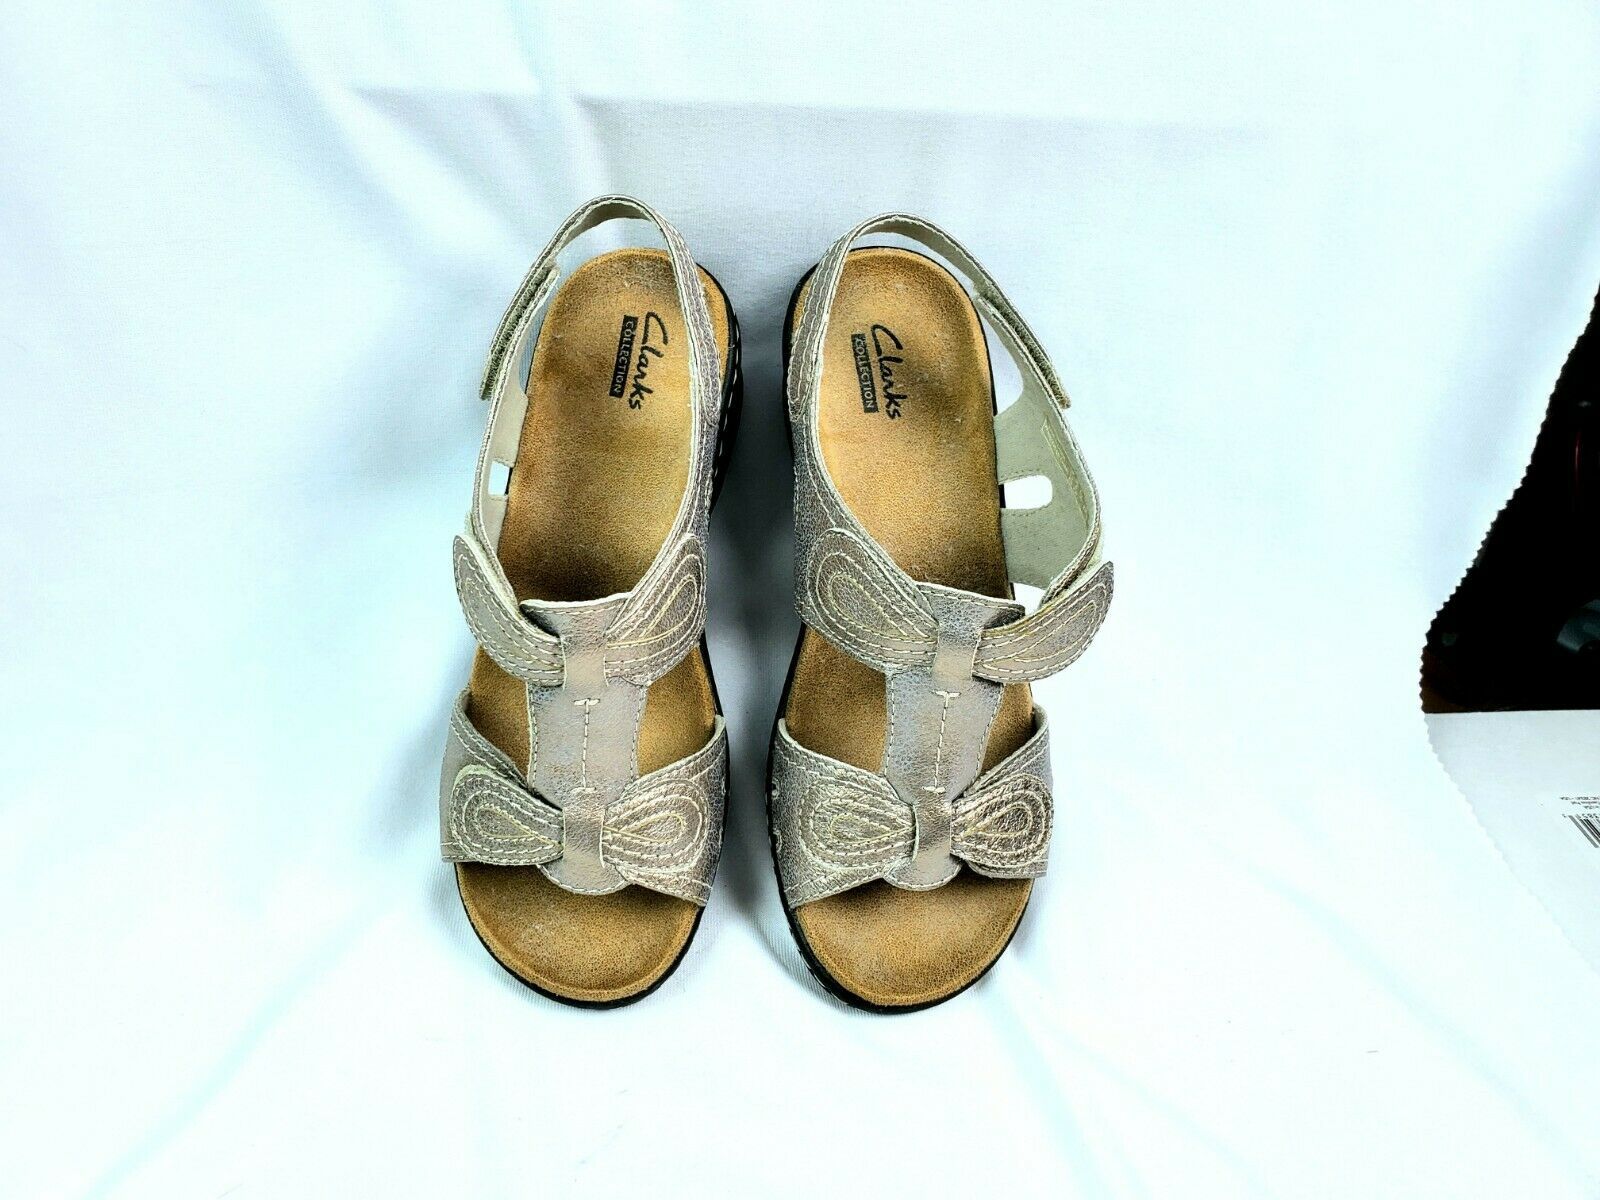 Clarks Bendables Sandals: 5 listings